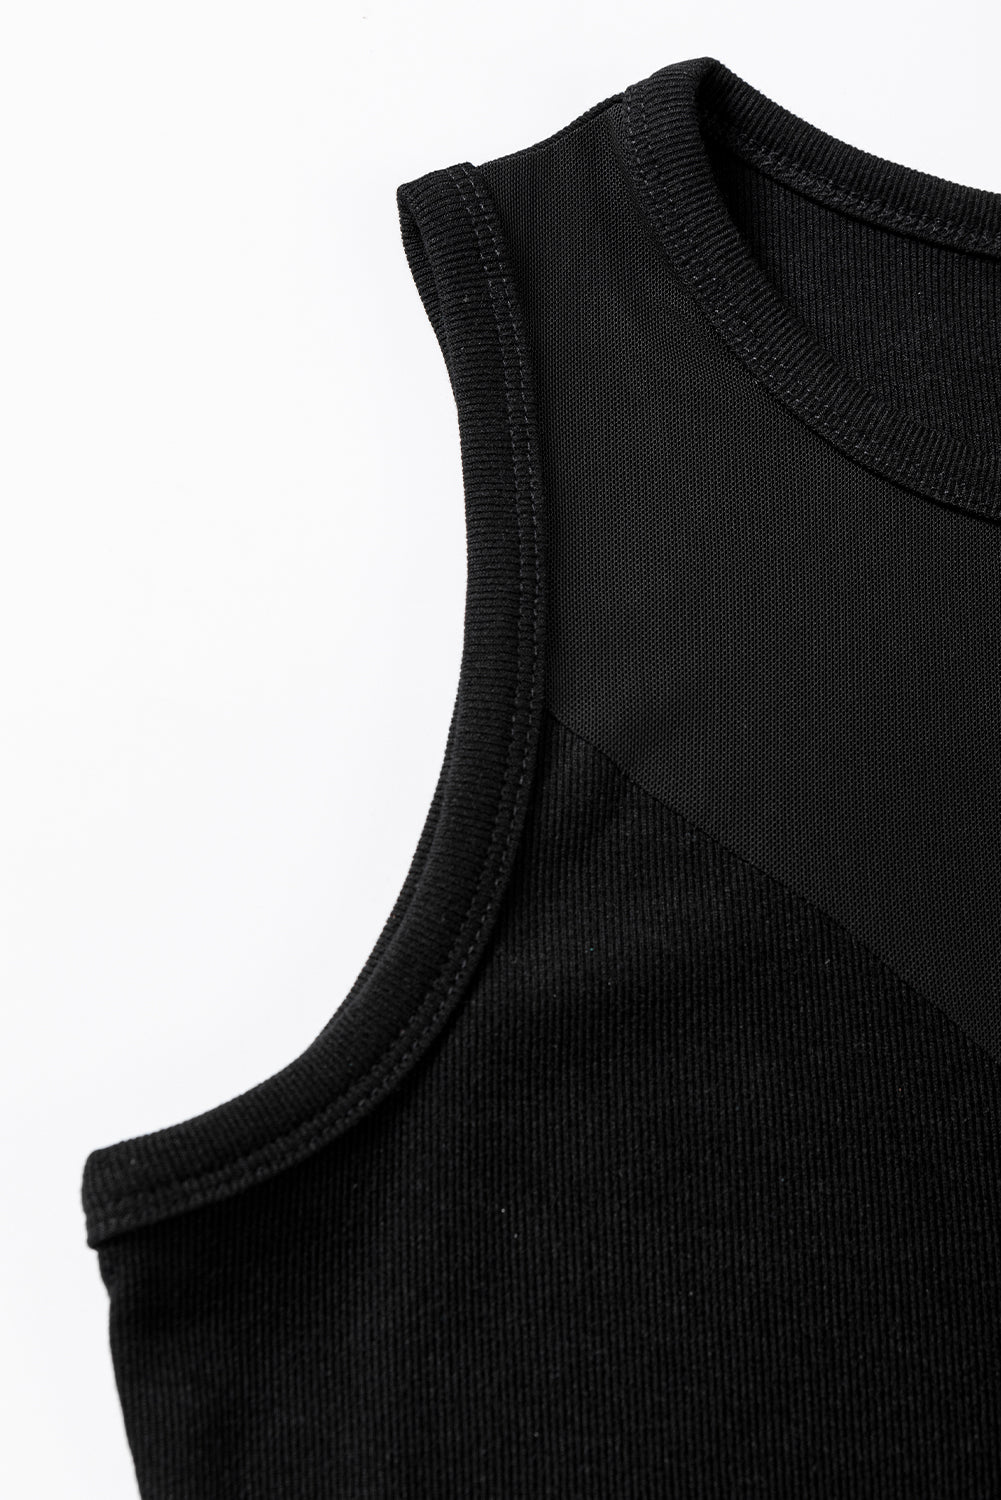 Black Mesh Patchwork Sleeveless Bodysuit - SELFTRITSS